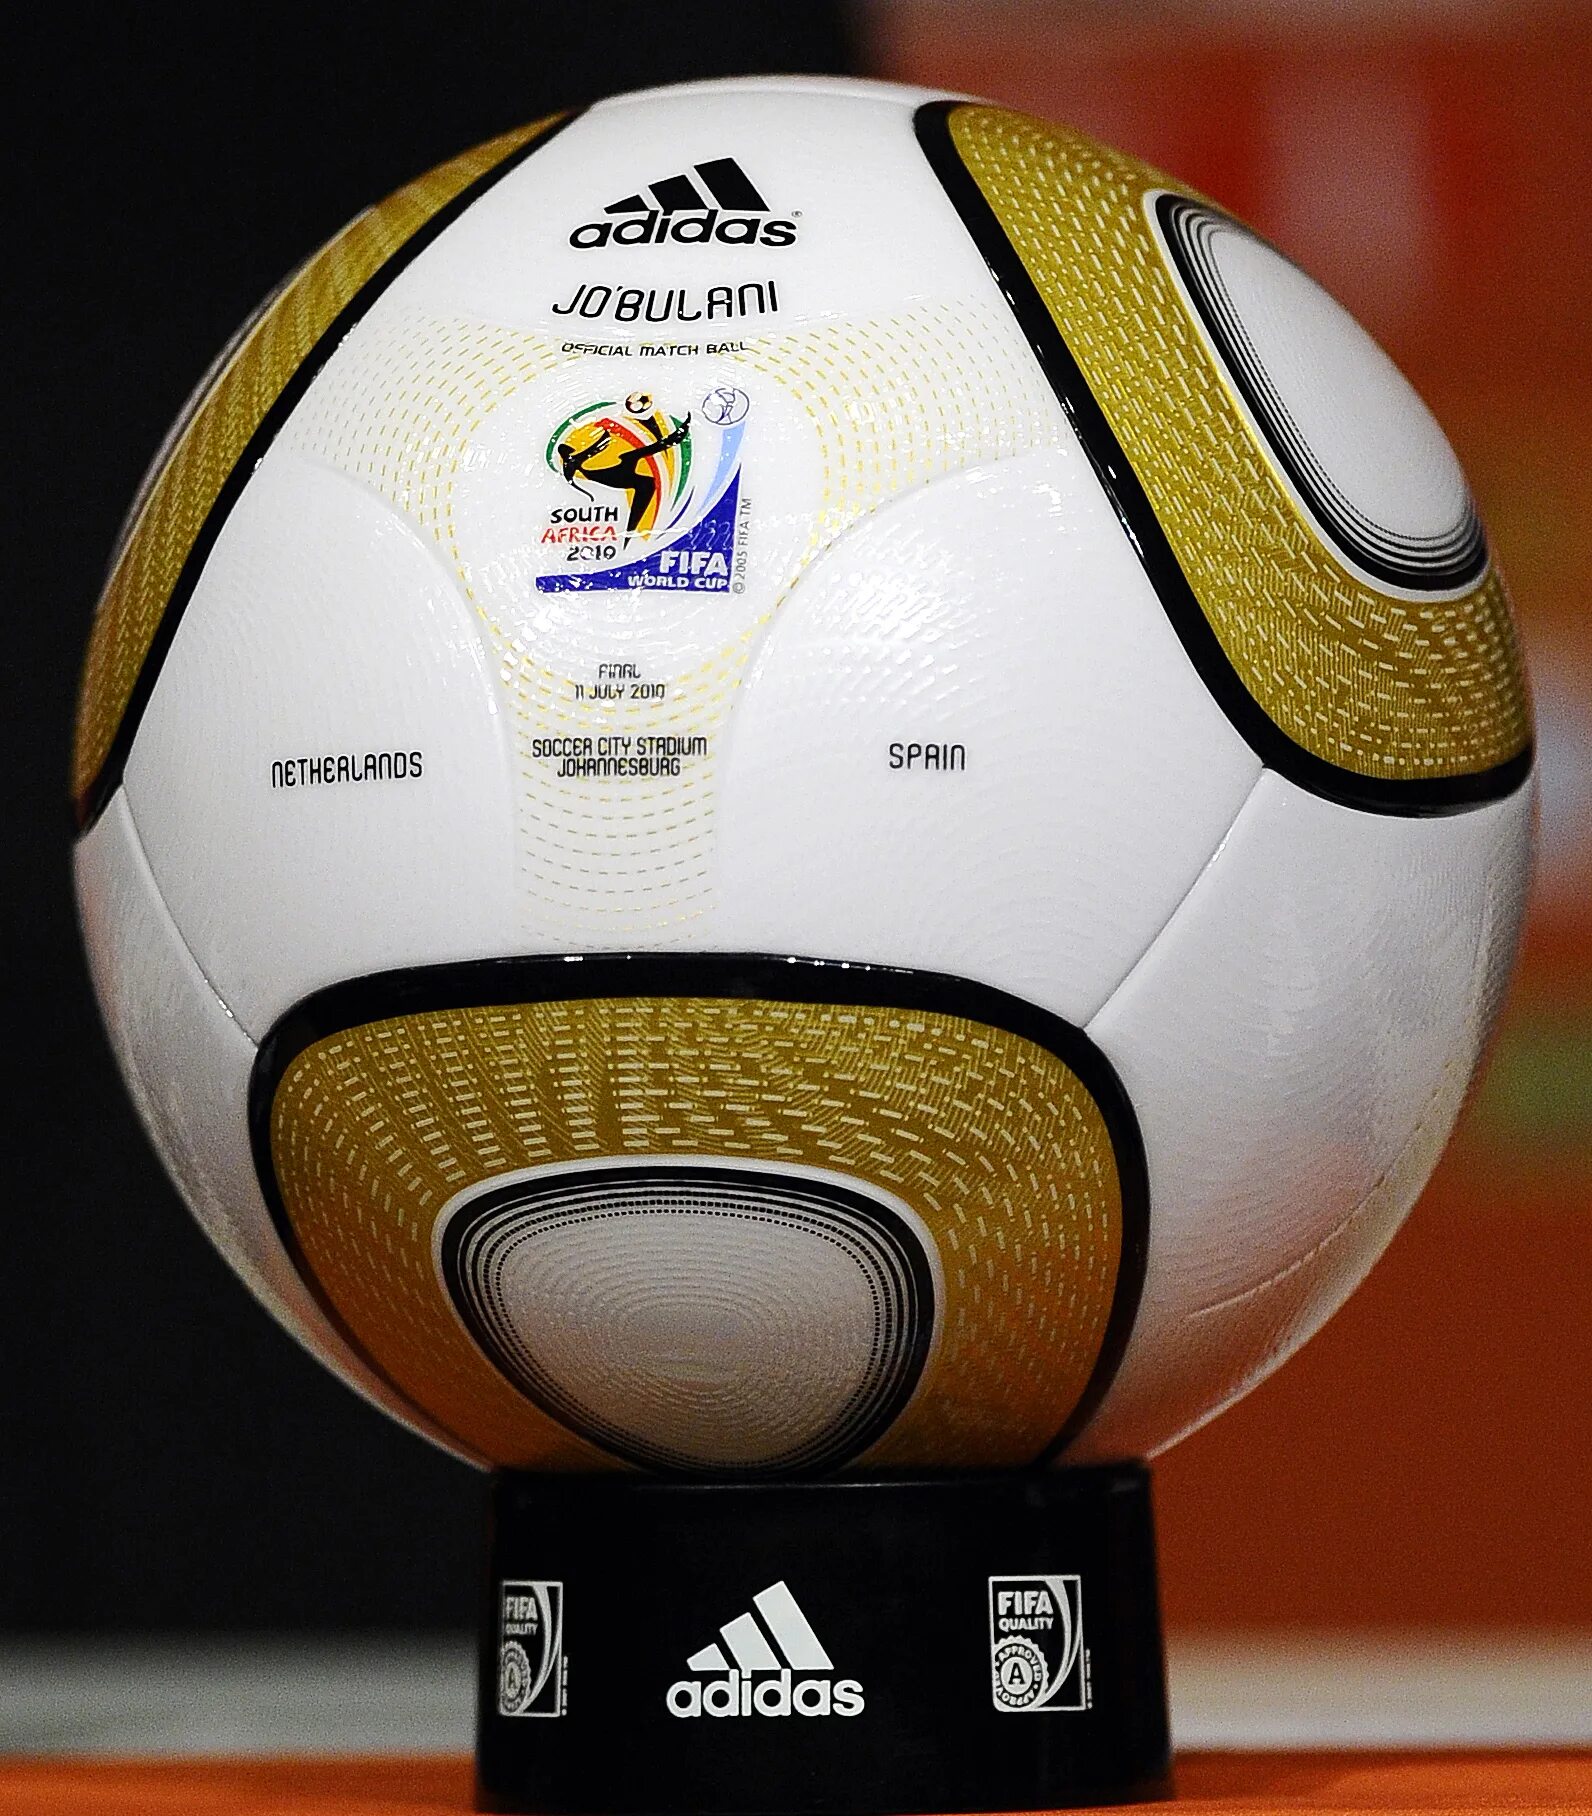 1 мяч в мире. Adidas Jabulani Official Match Ball 2010. Adidas Jabulani. Джабулани 2007. Adidas World Cup Ball 2010.